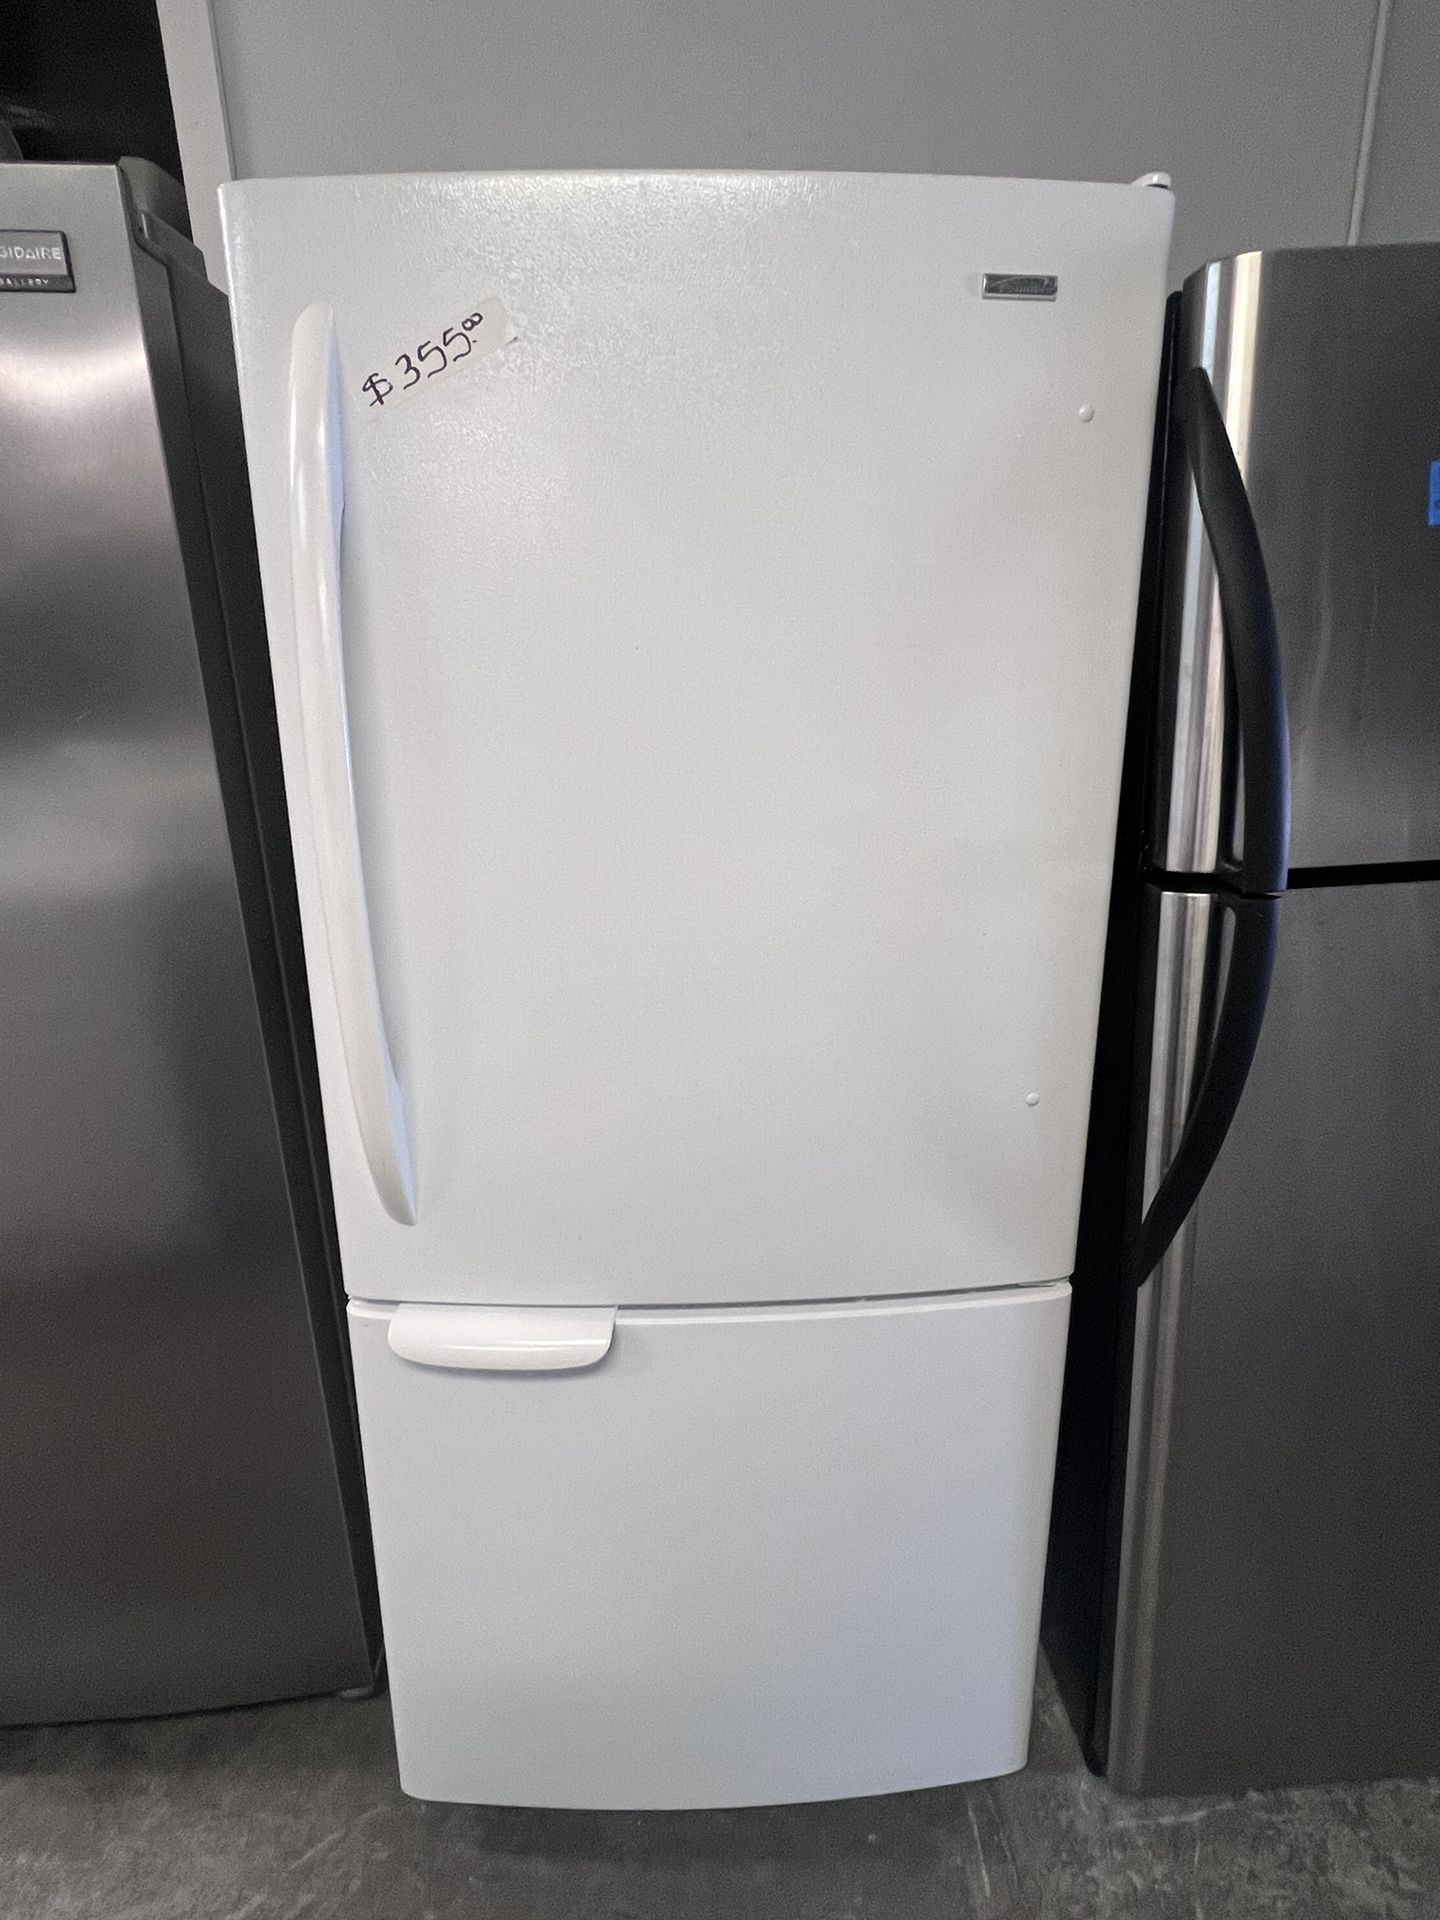 Bottom Freezer Refrigerator White 30 Inches Used 